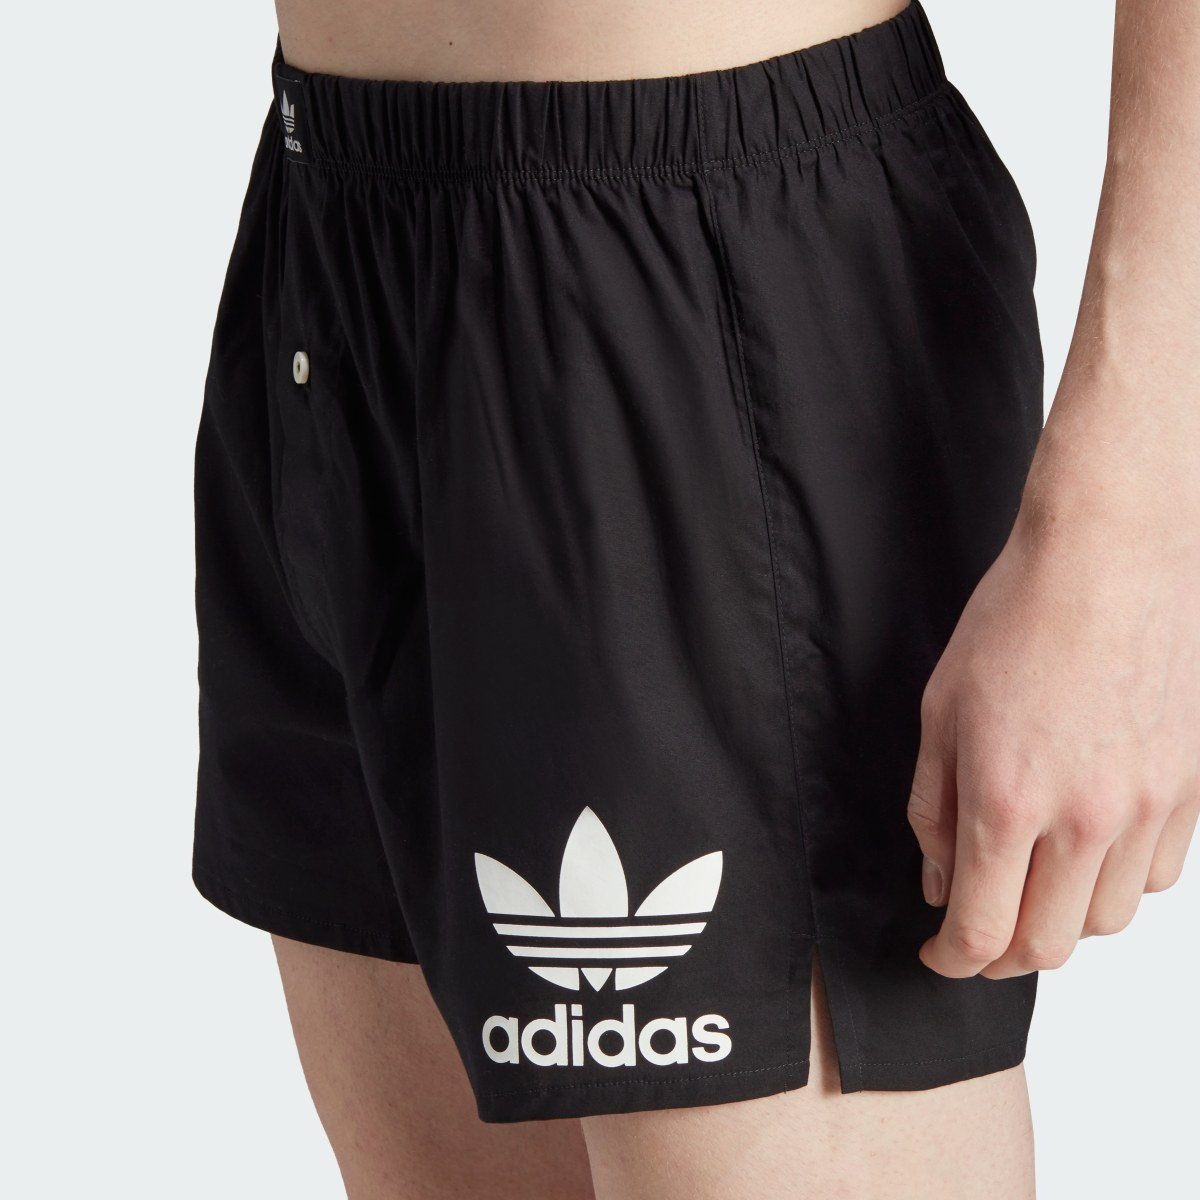 Adidas Comfort Core Cotton Icon Woven Boxer Underwear 2 Pack. 7